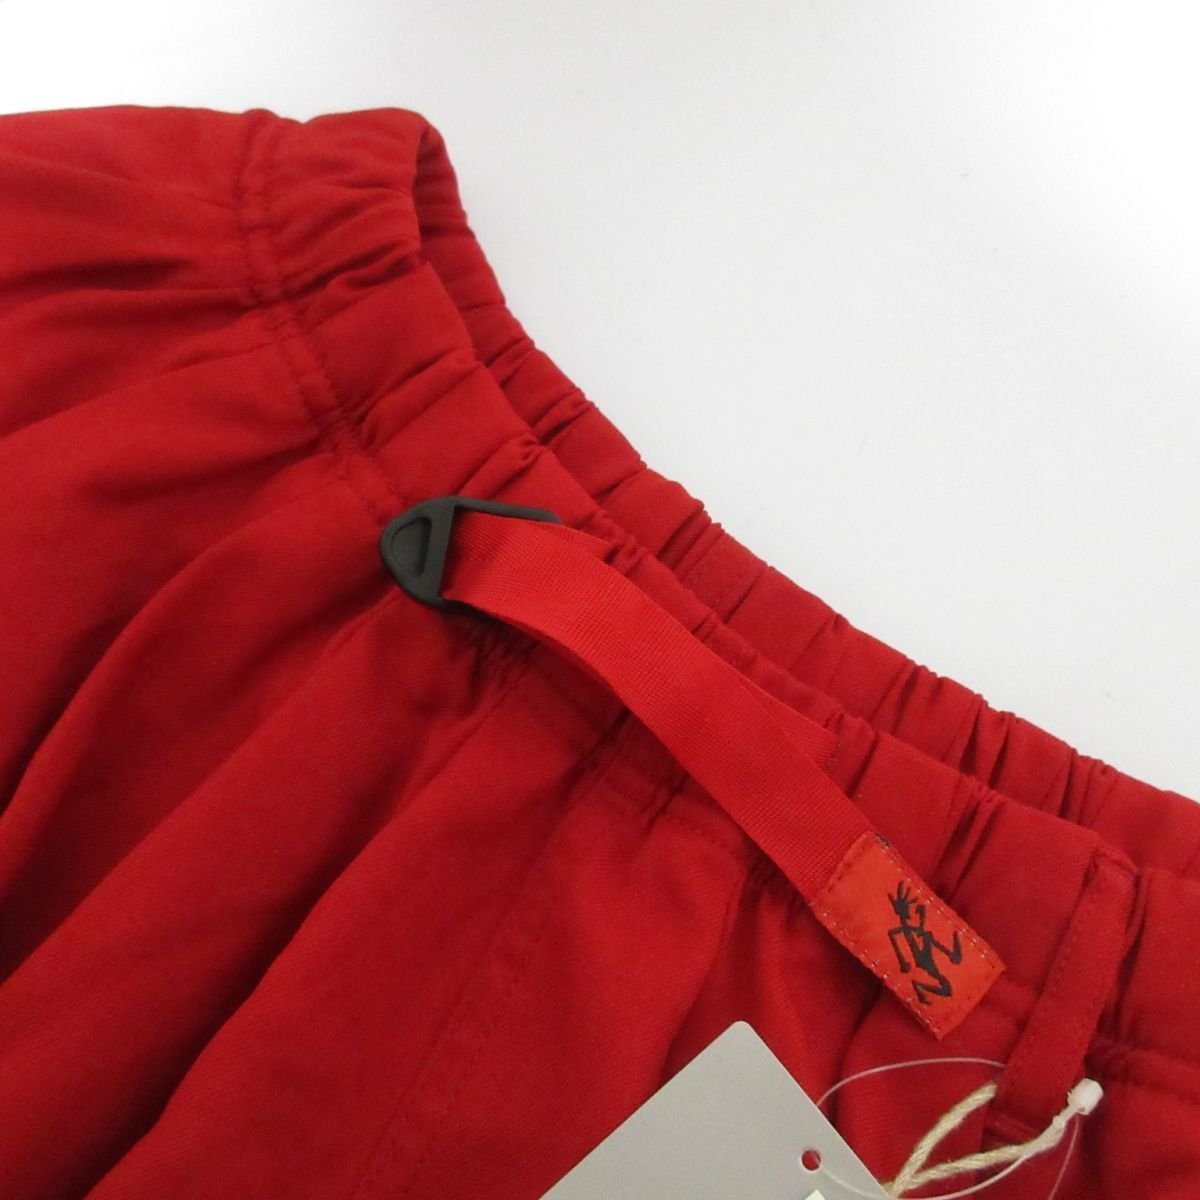  не использовался 22AW GRAMICCI×BEAMS BOY Gramicci Beams Boy специальный заказ gya The - длинная юбка GLSK2-F1047 размер F красный *